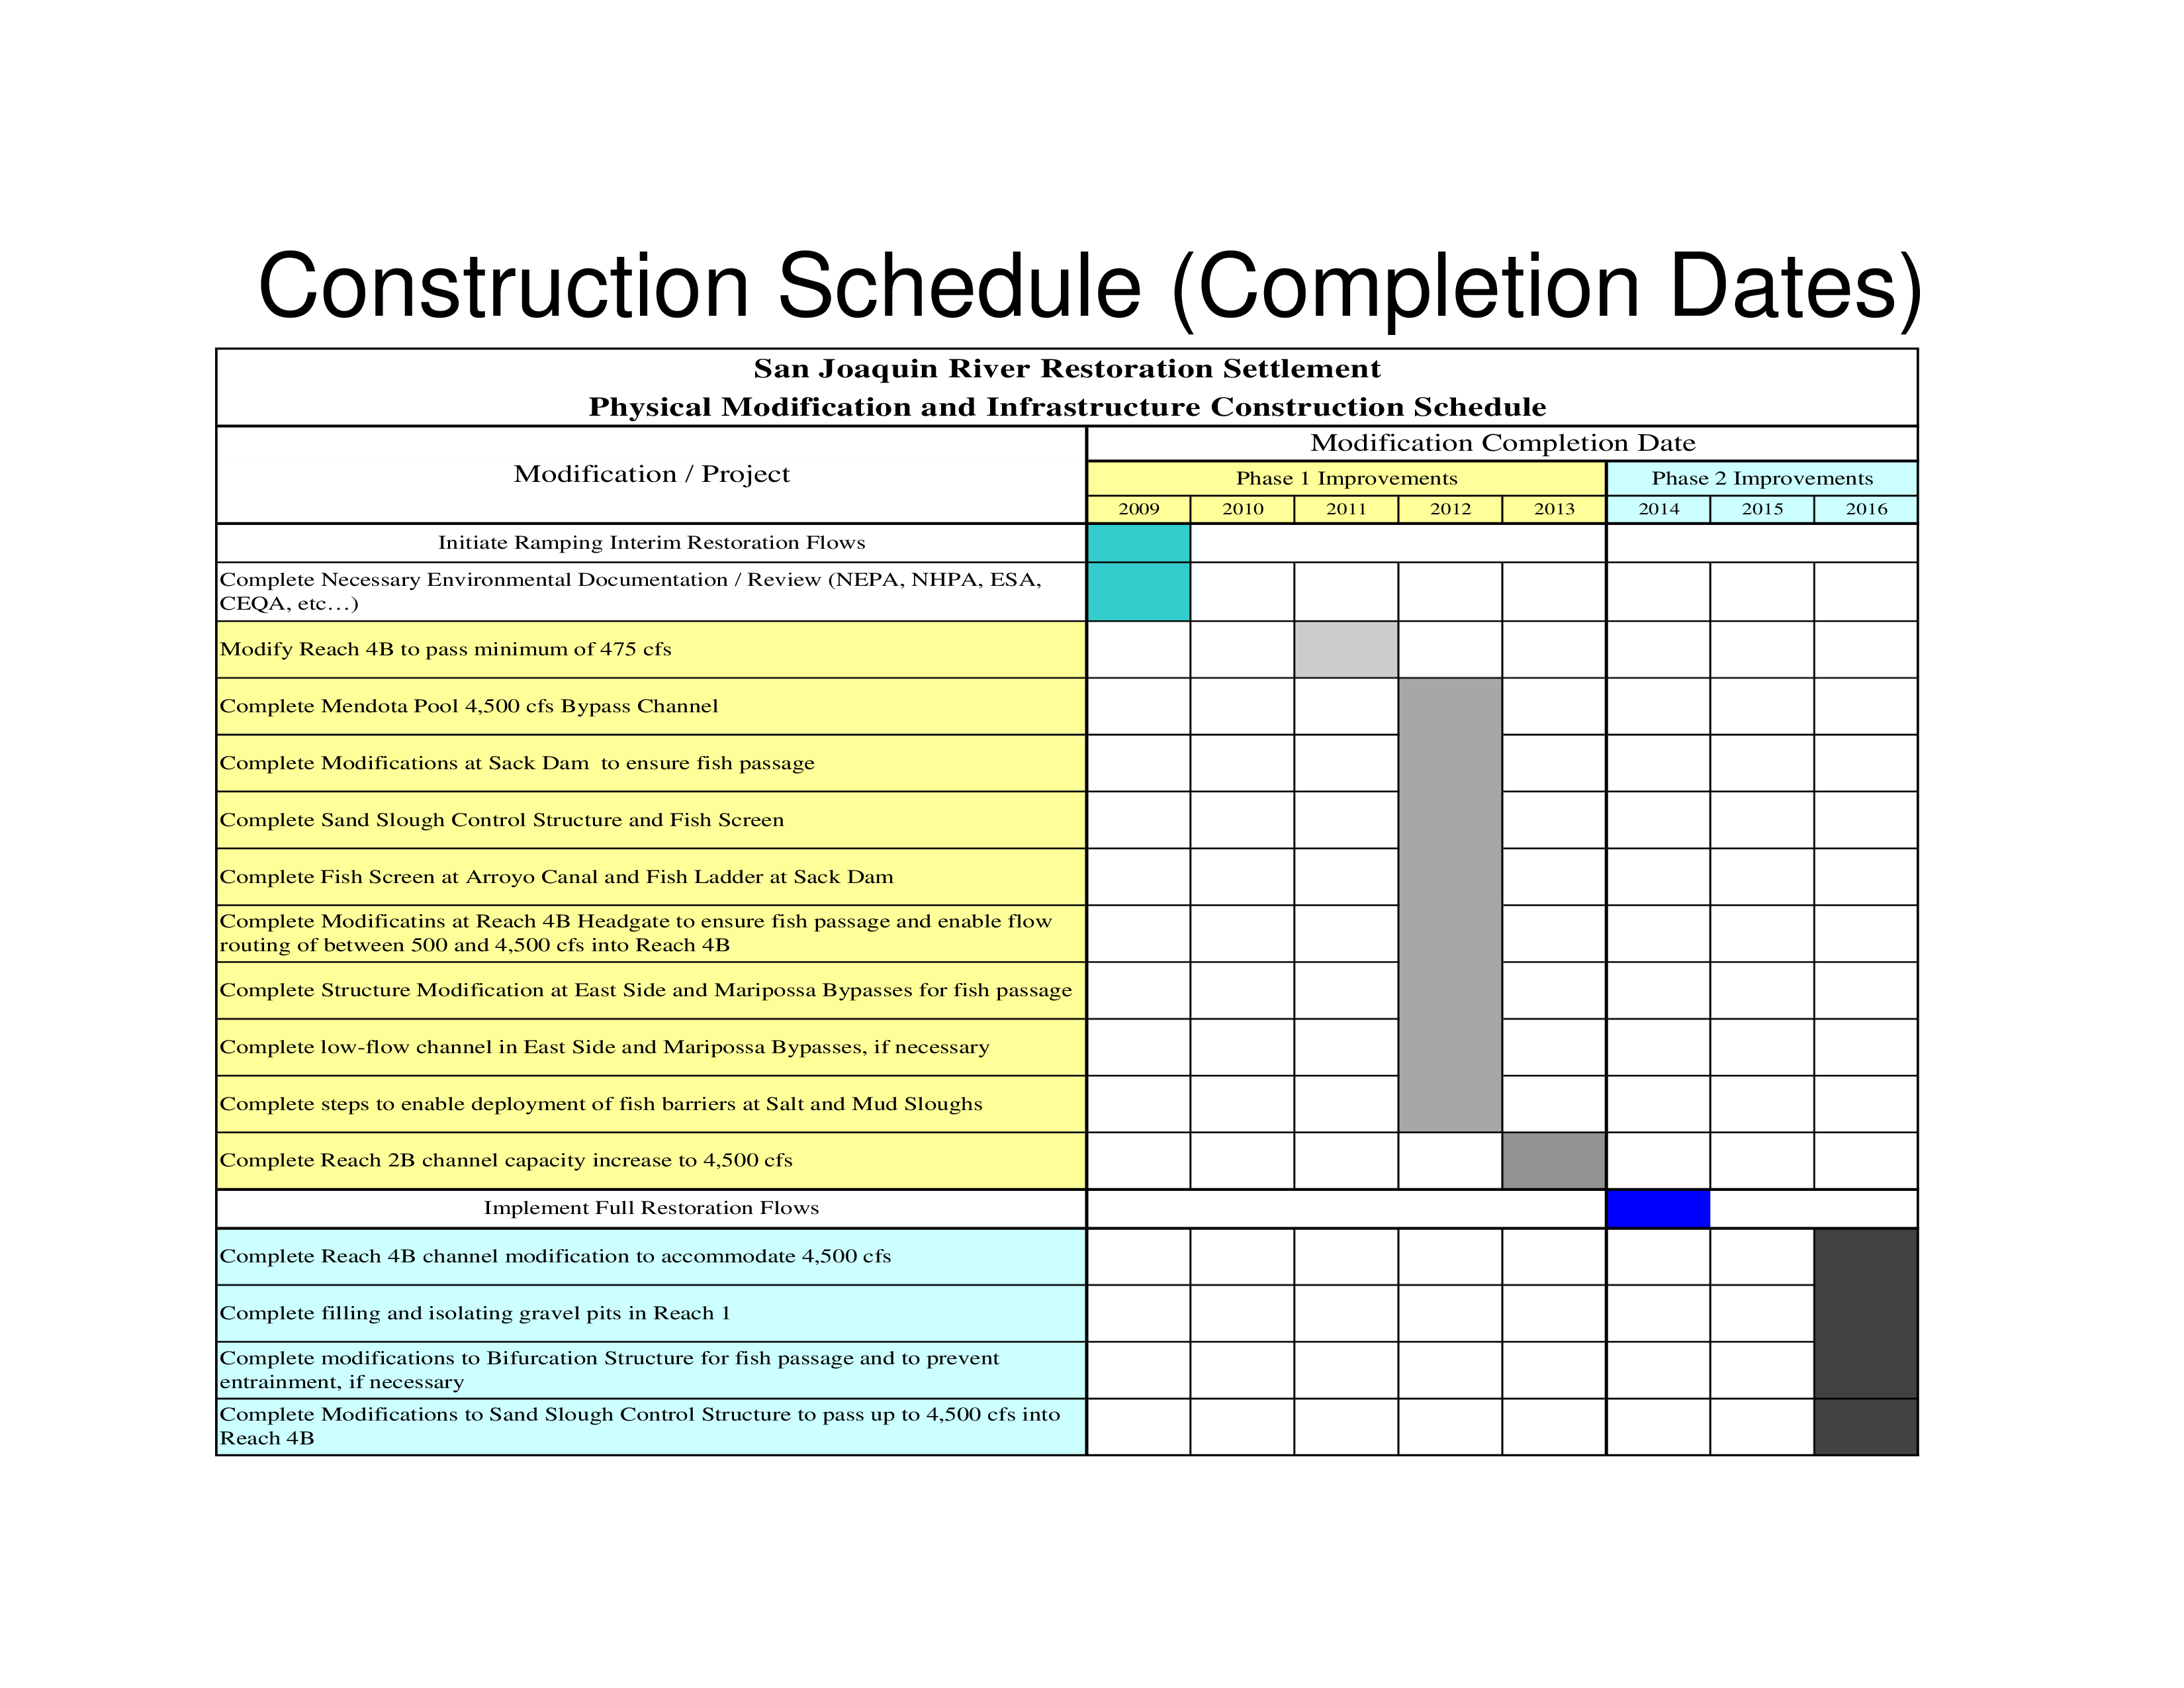 work timeline schedule by weeks template